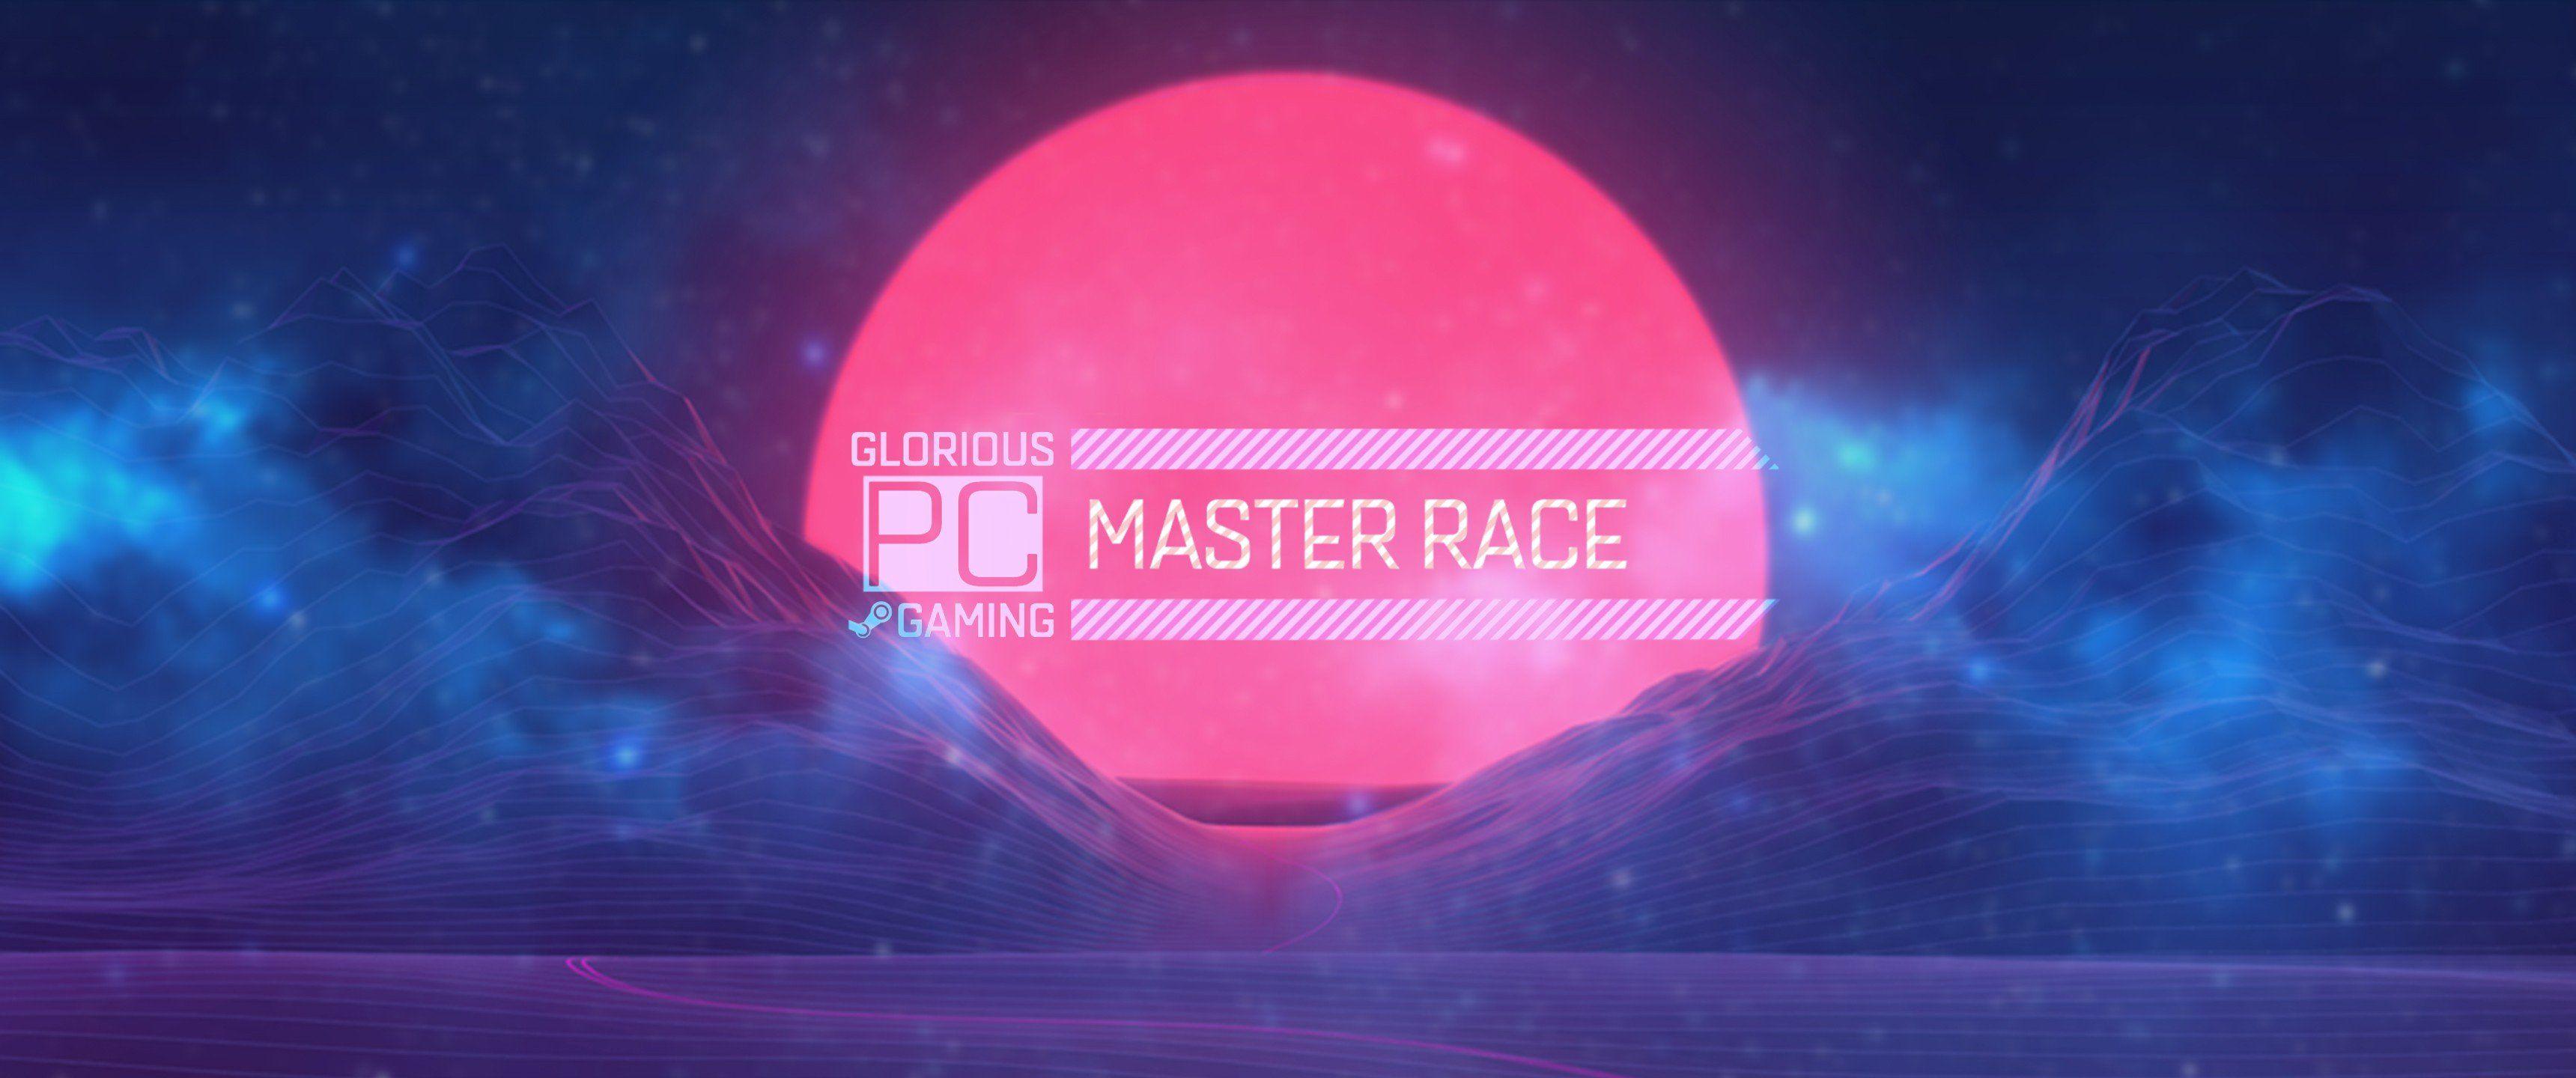 PC Master Race, Simple, Retro style Wallpaper HD / Desktop